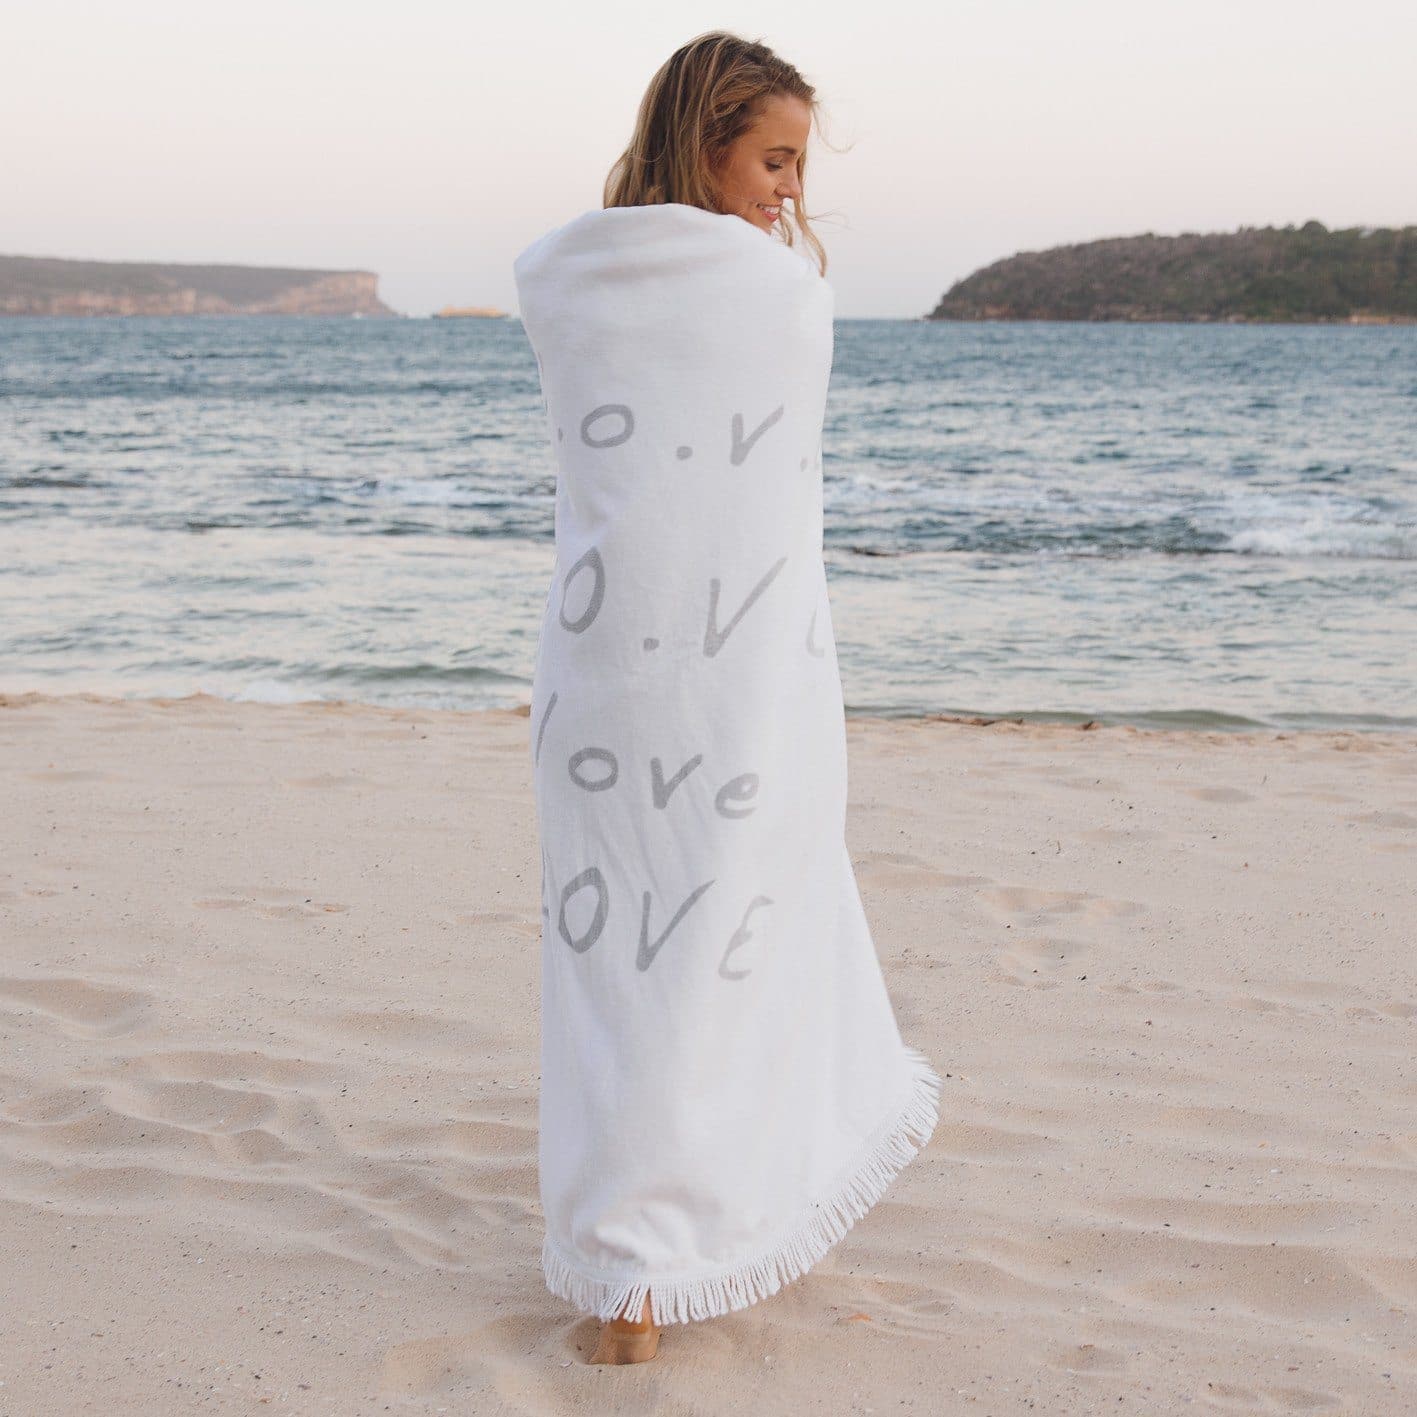 Round Beach Towel/Picnic Blanket - Love Always